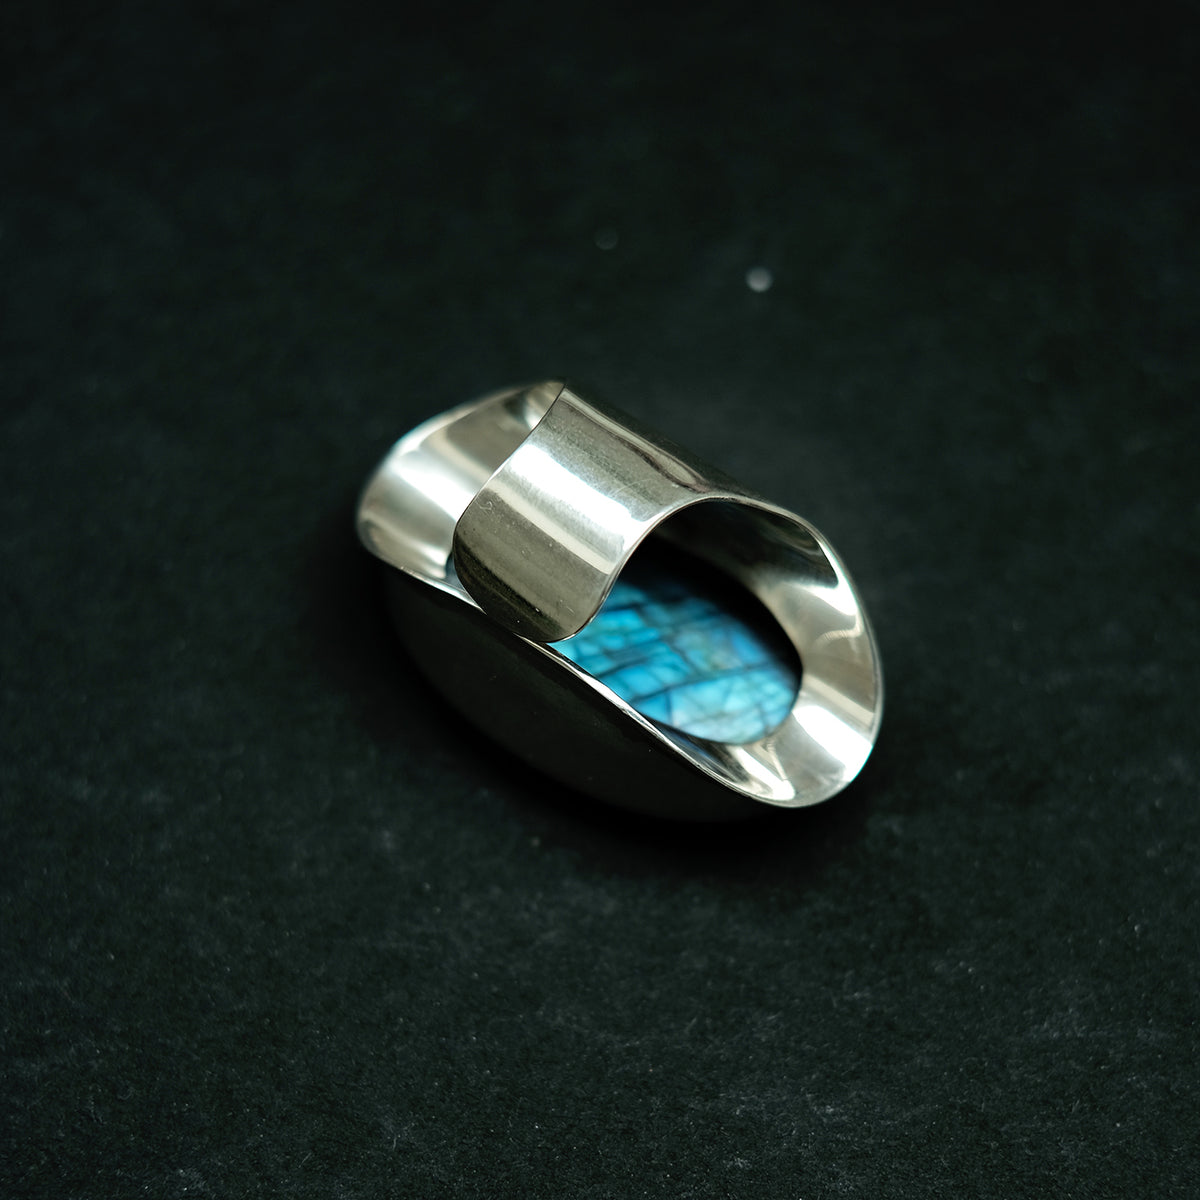 Silver ring with labradorite.